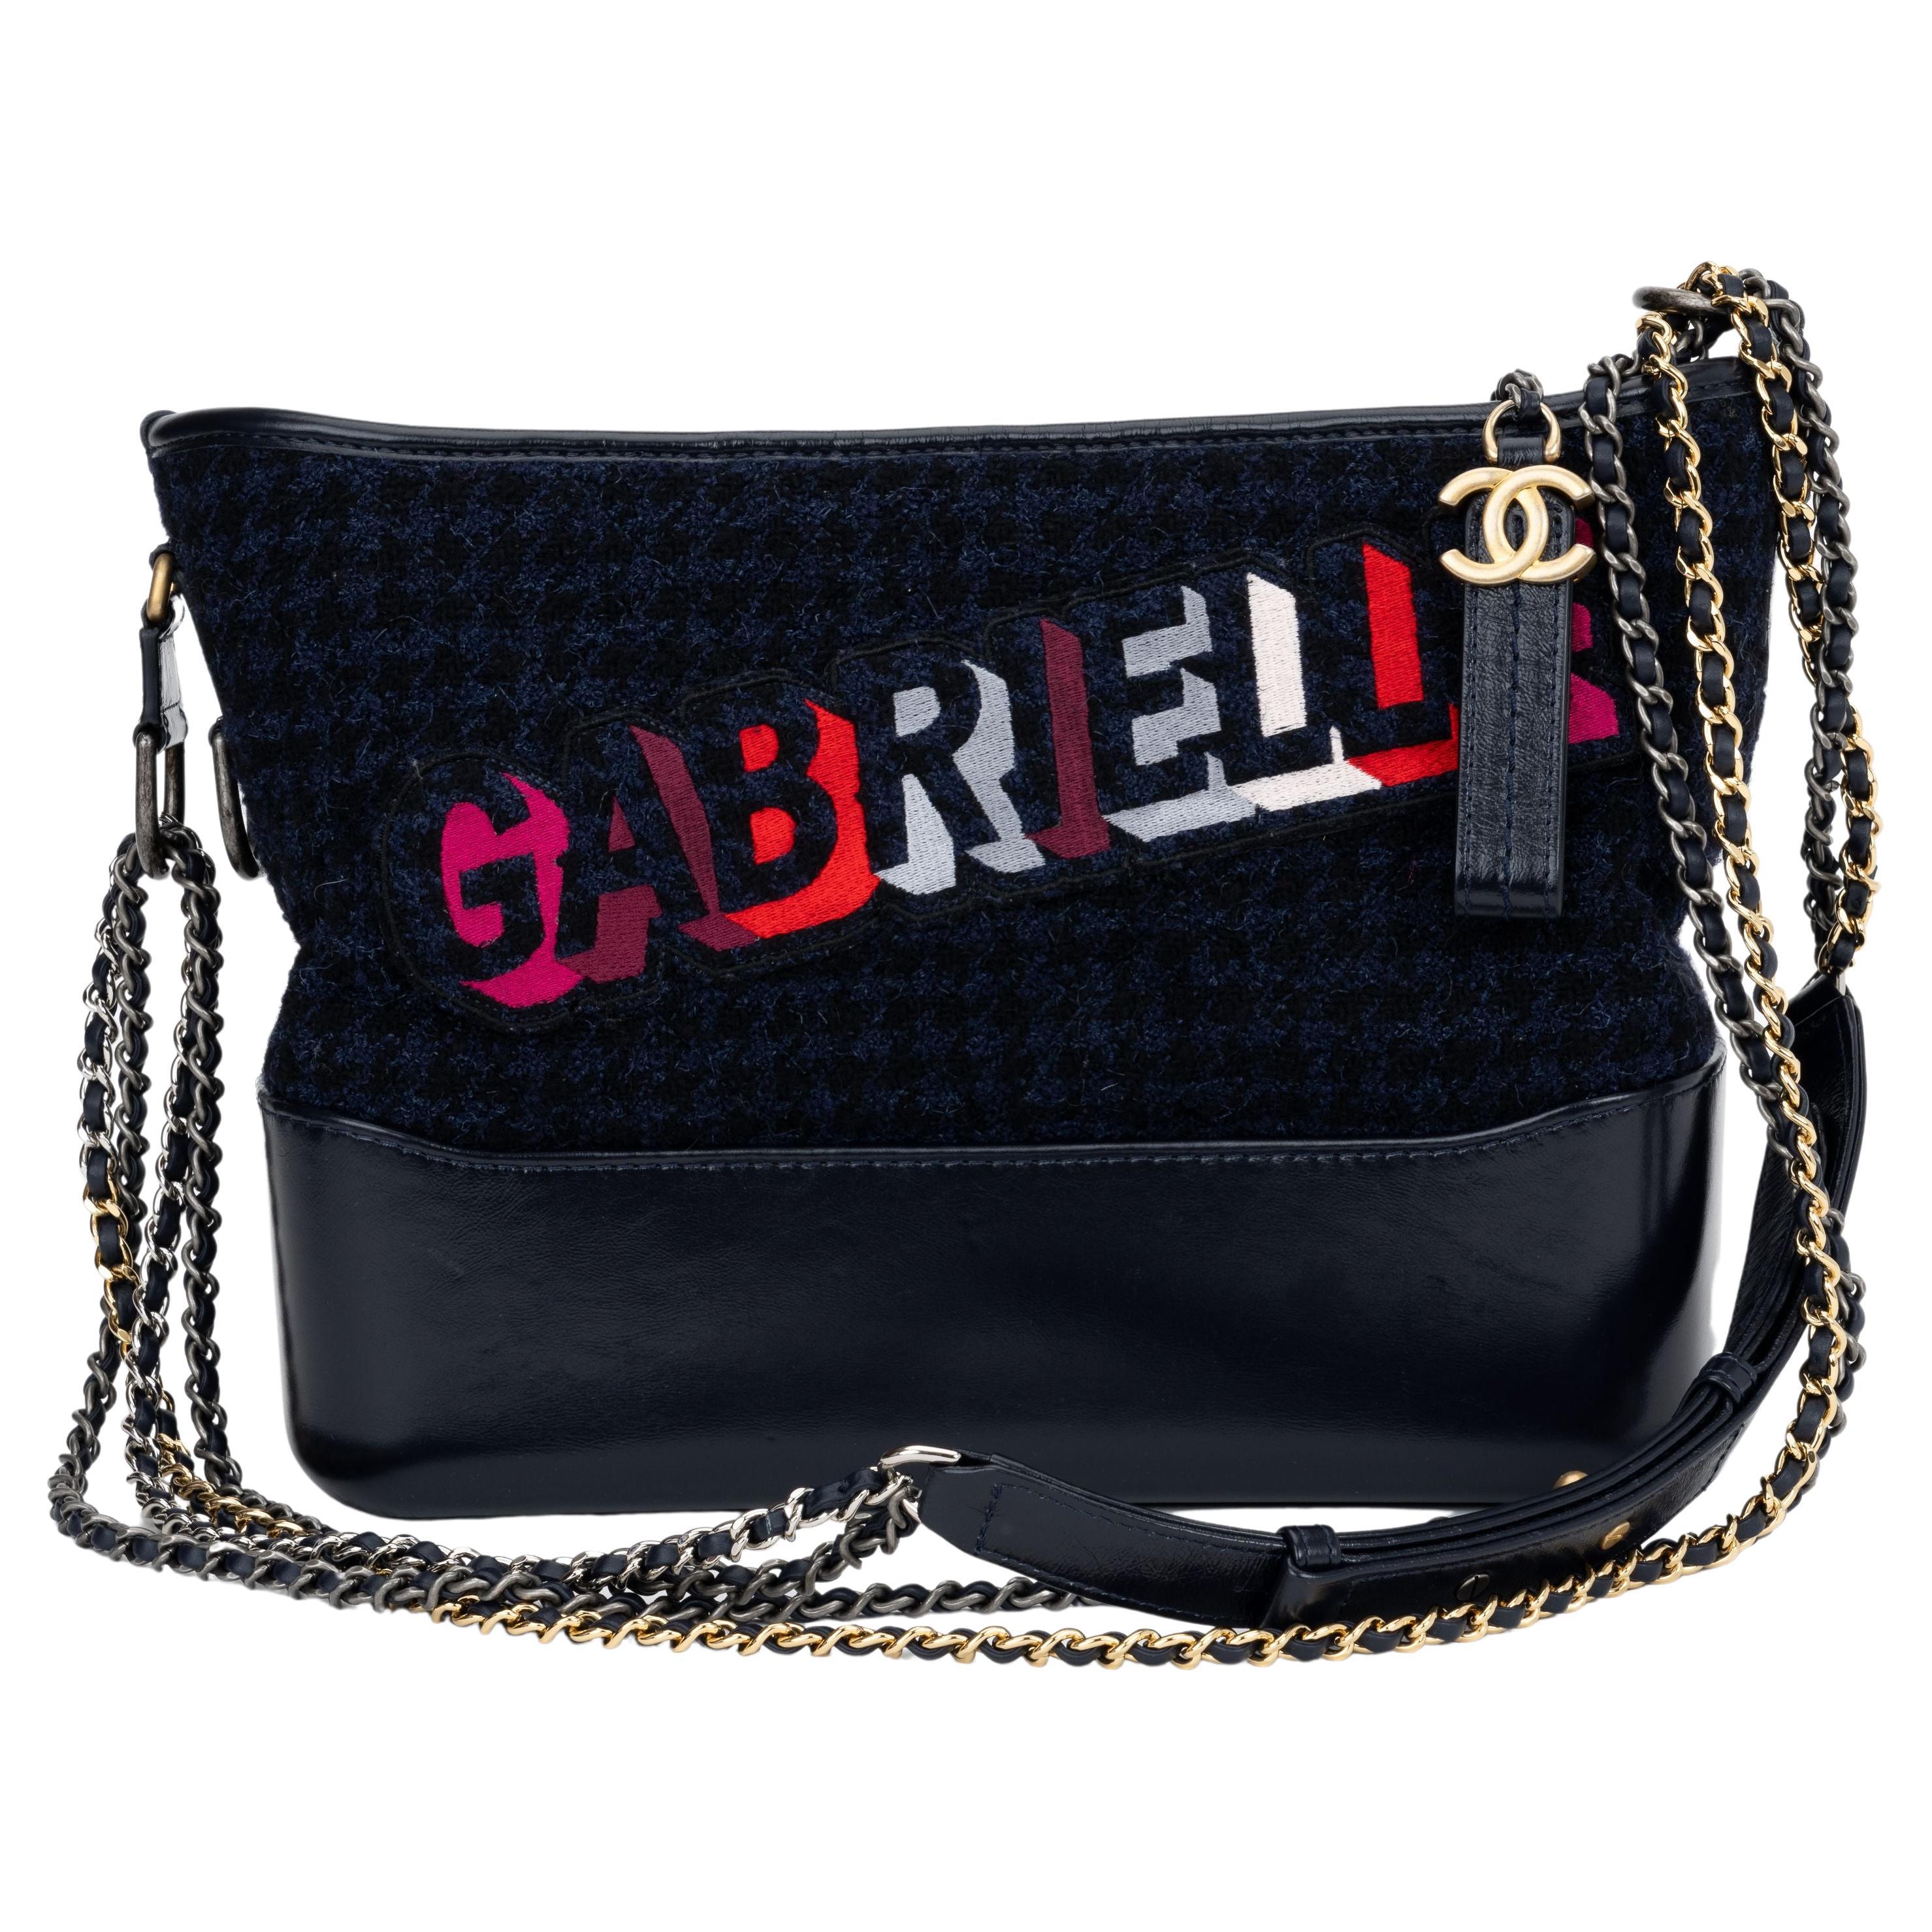 Chanel Navy Tweed Gabrielle Bag